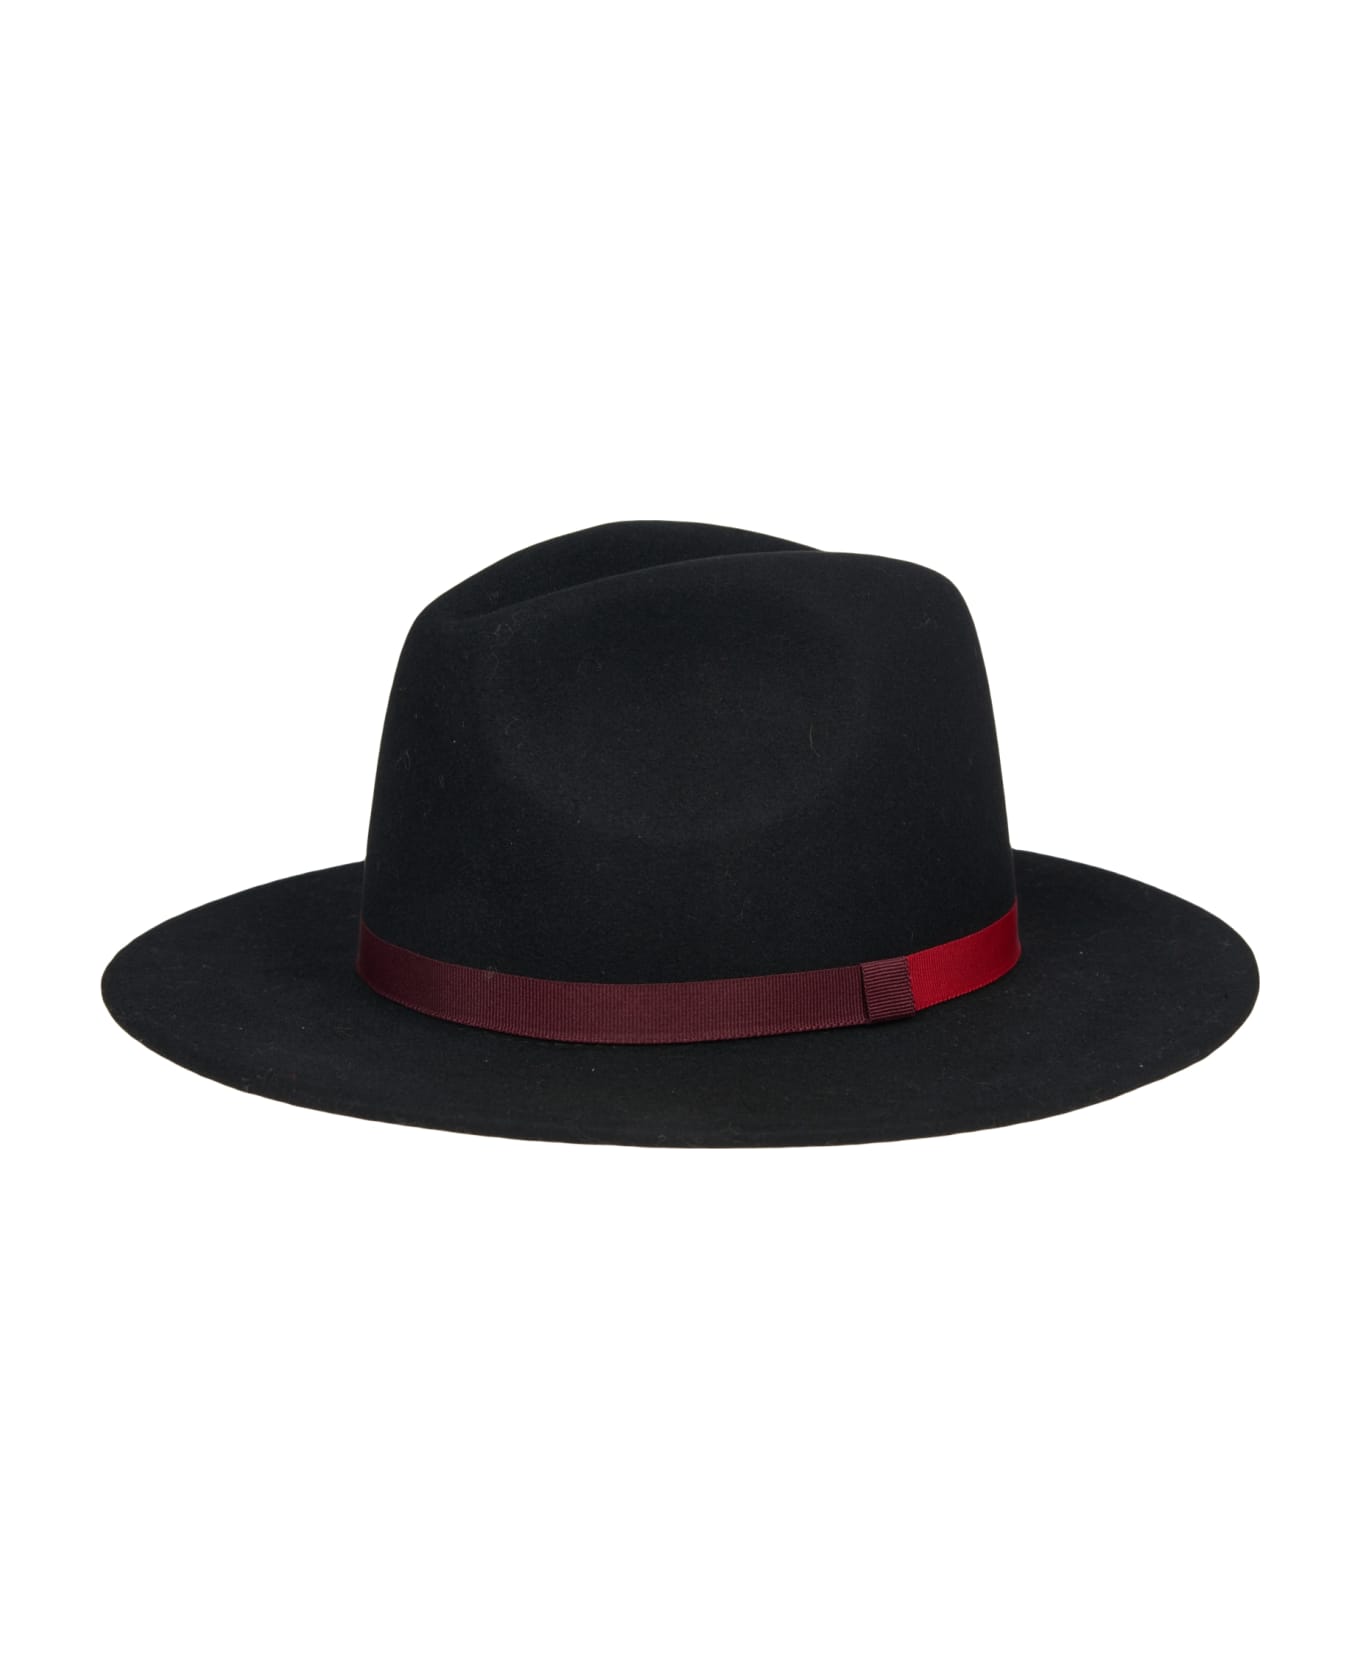 Paul Smith Hat - Black